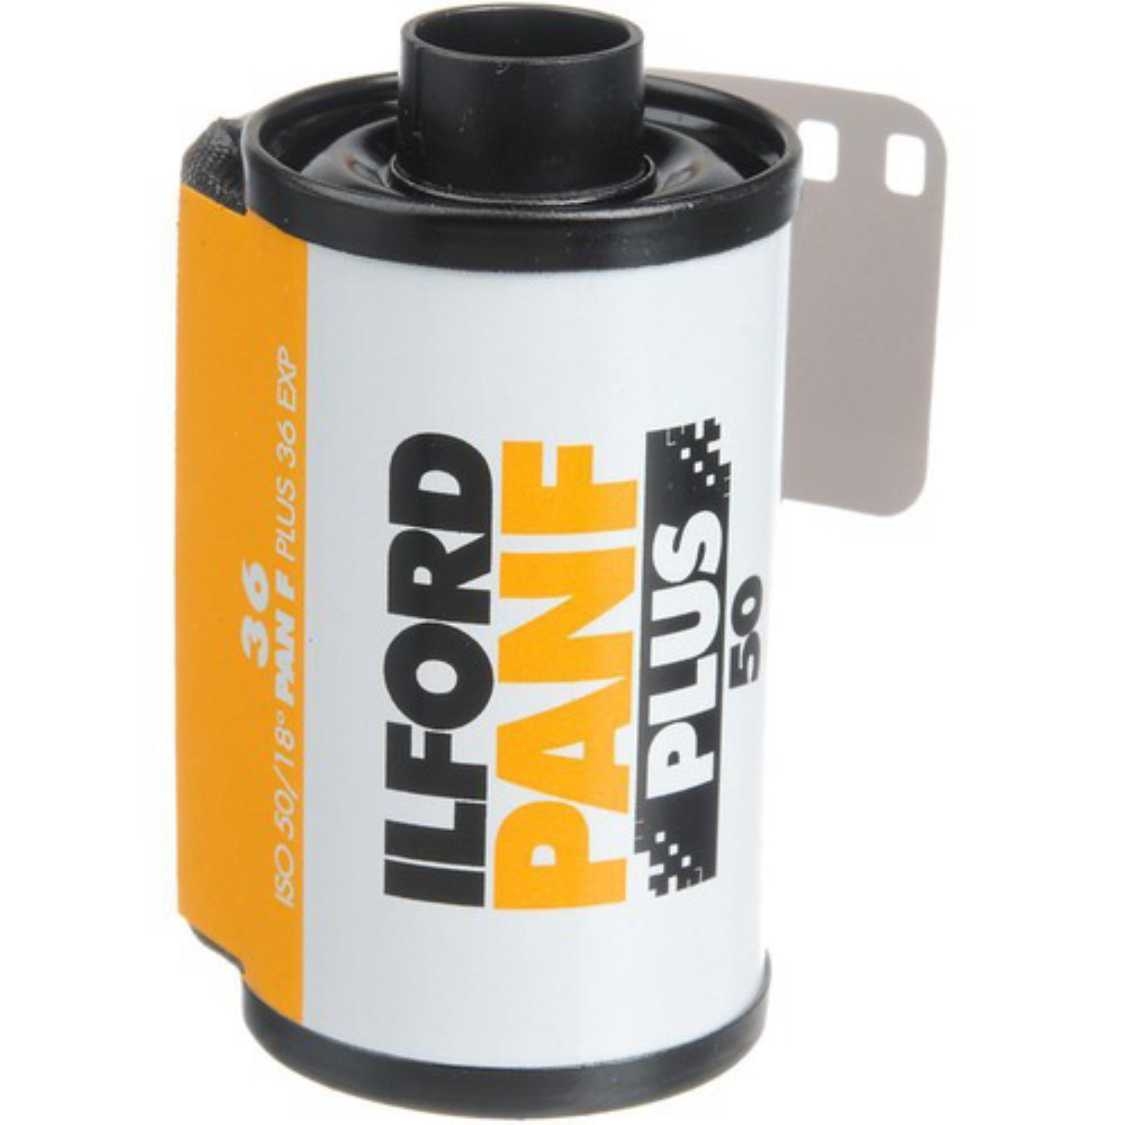 Ilford Pan F Plus 50 135 Film (36 exposure)